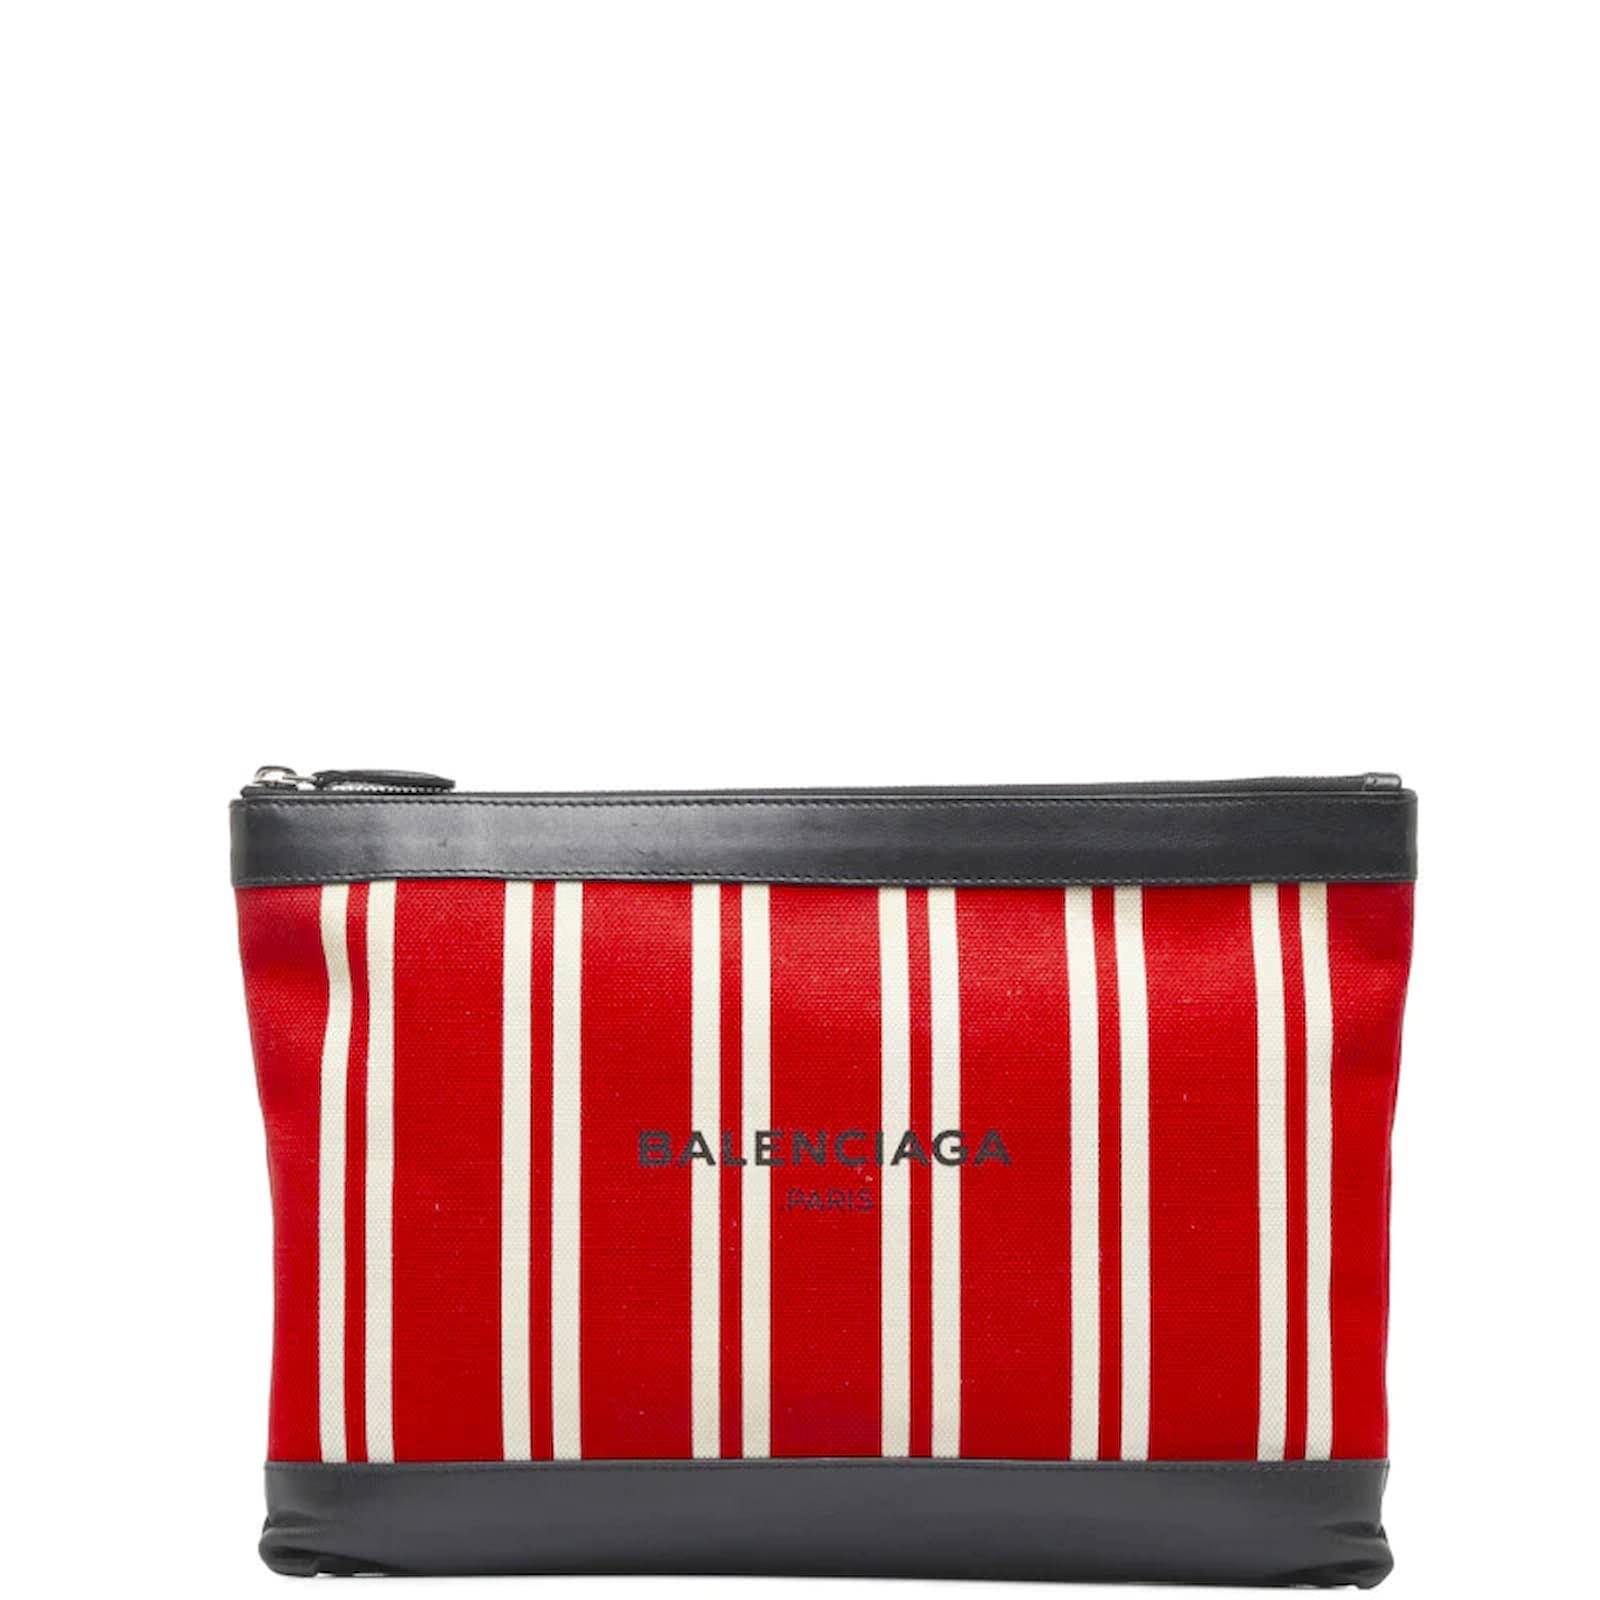 Balenciaga Navy Clip Canvas Clutch Bag 420407 Red Cloth Pony-style